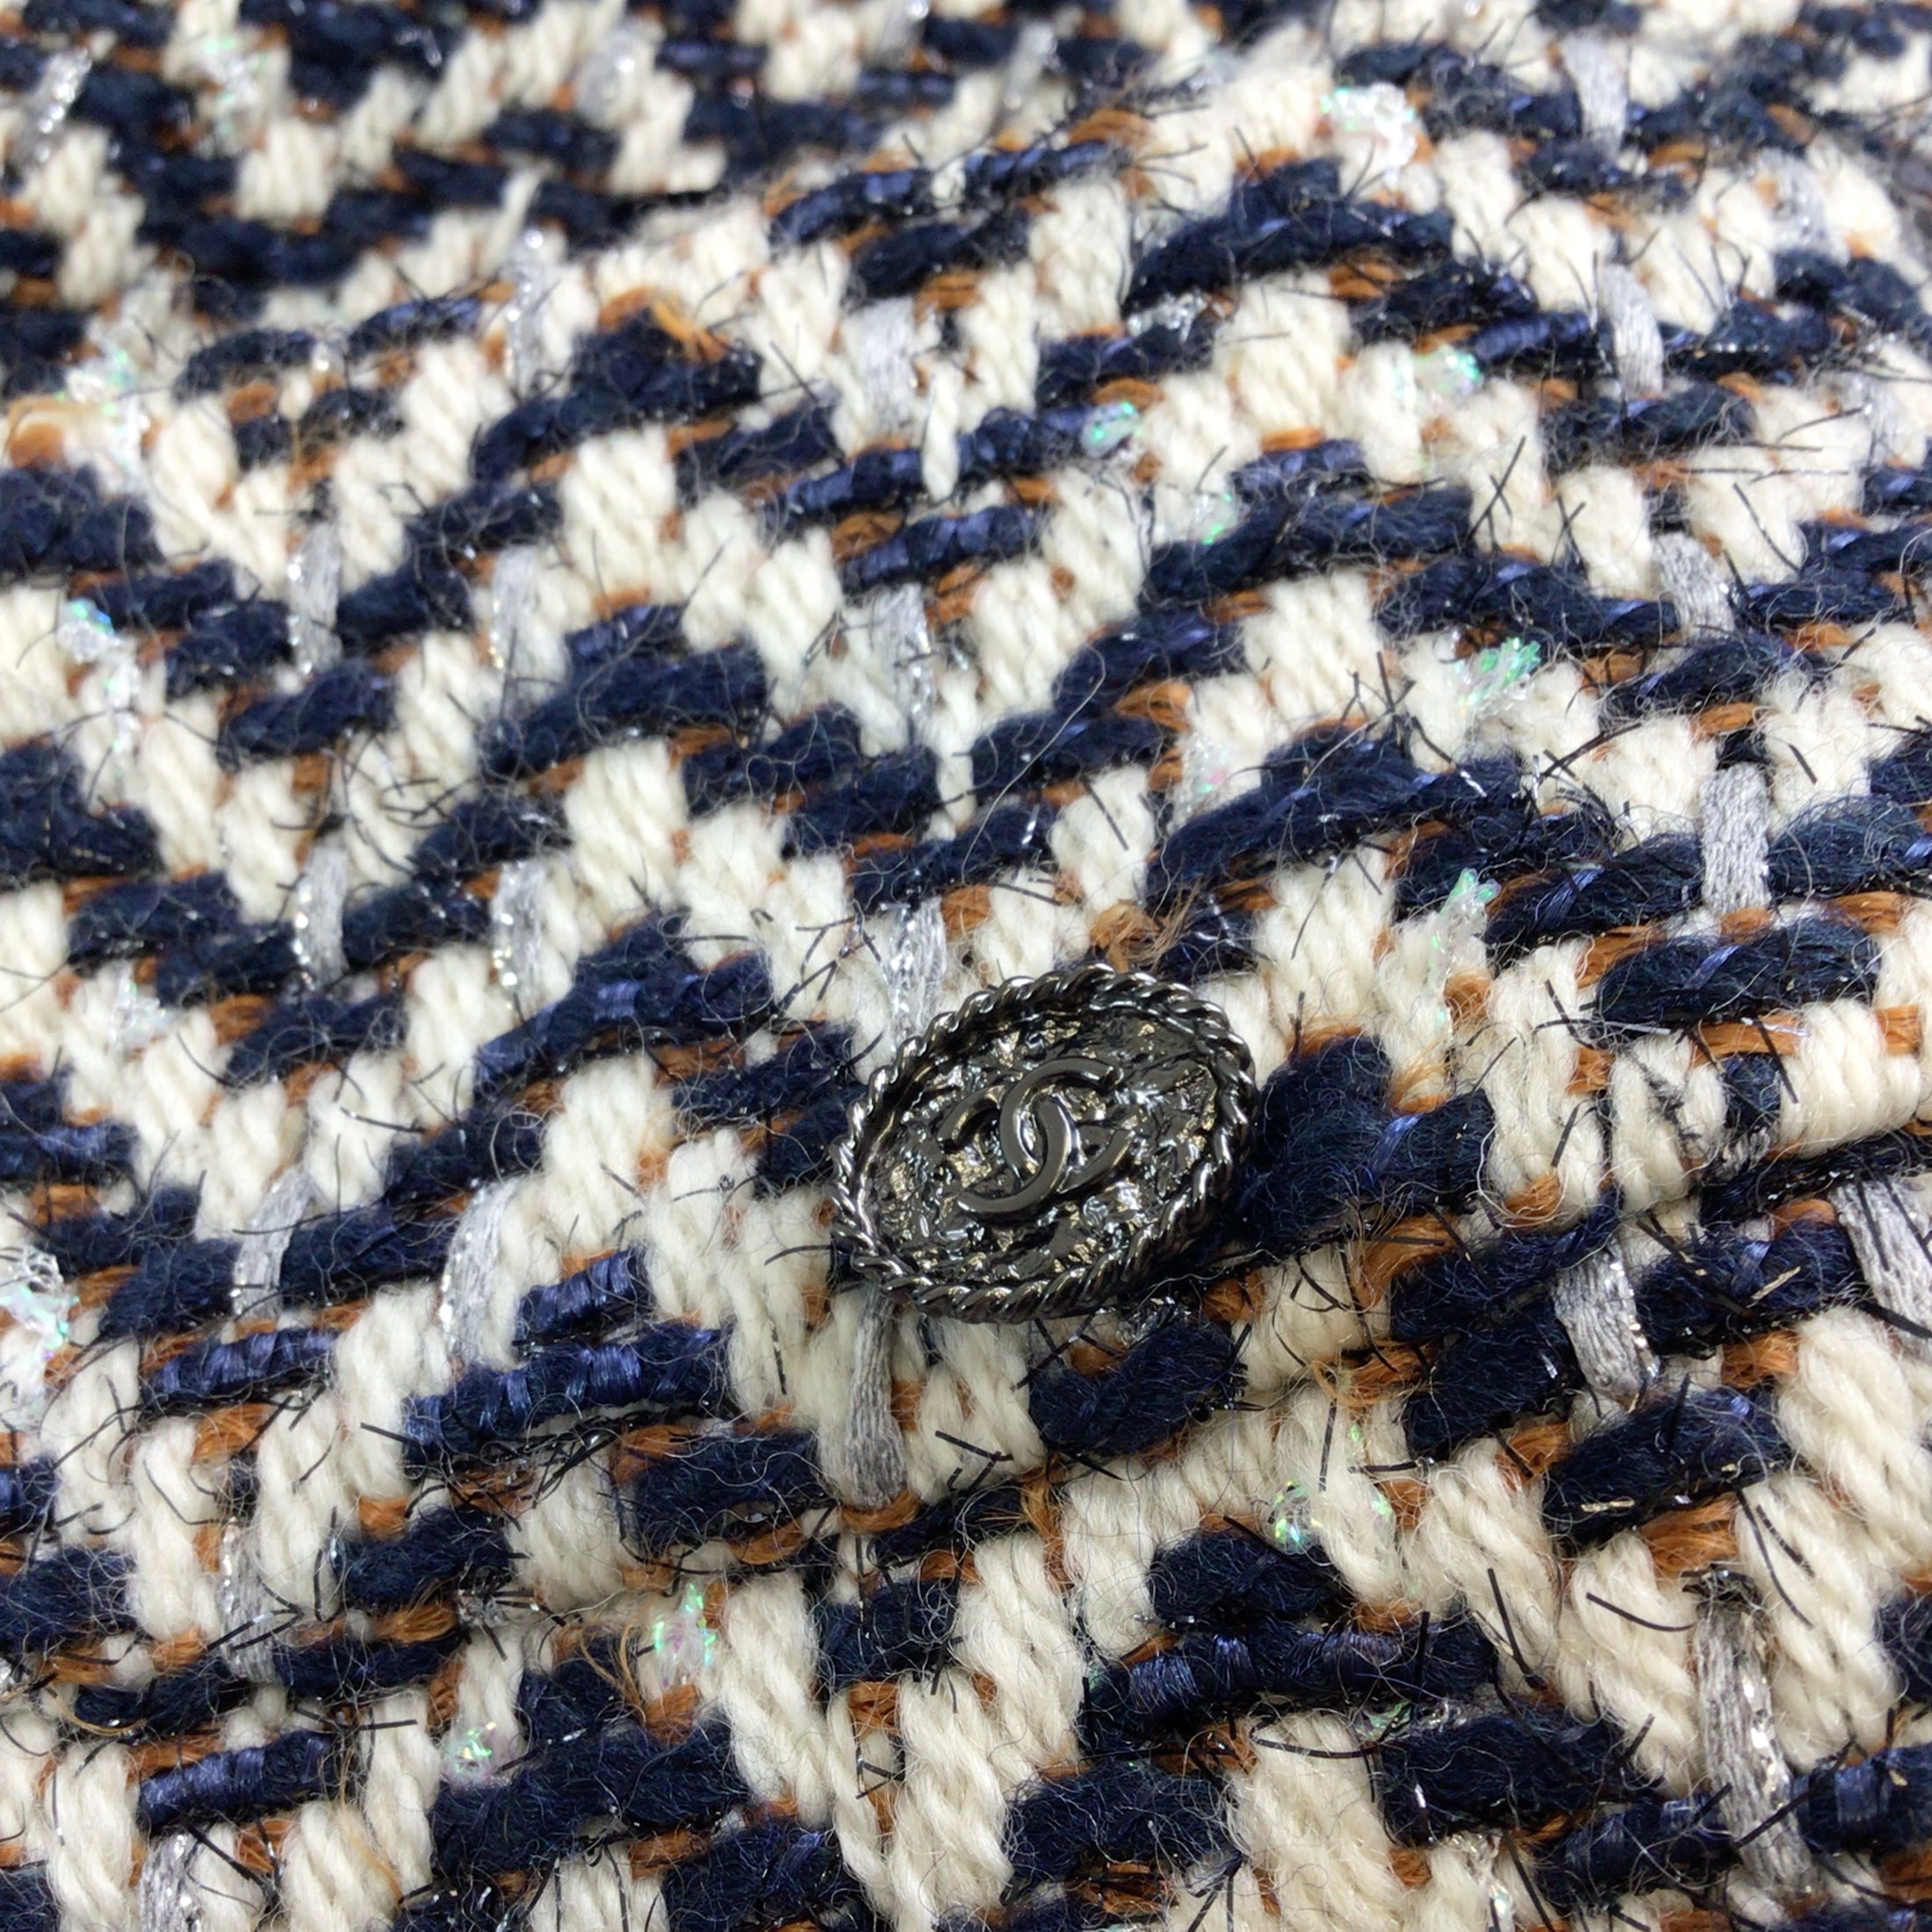 Chanel Navy Blue / Ivory / Tan Multi Metallic Detail Woven Chevron Wool Knit Skirt